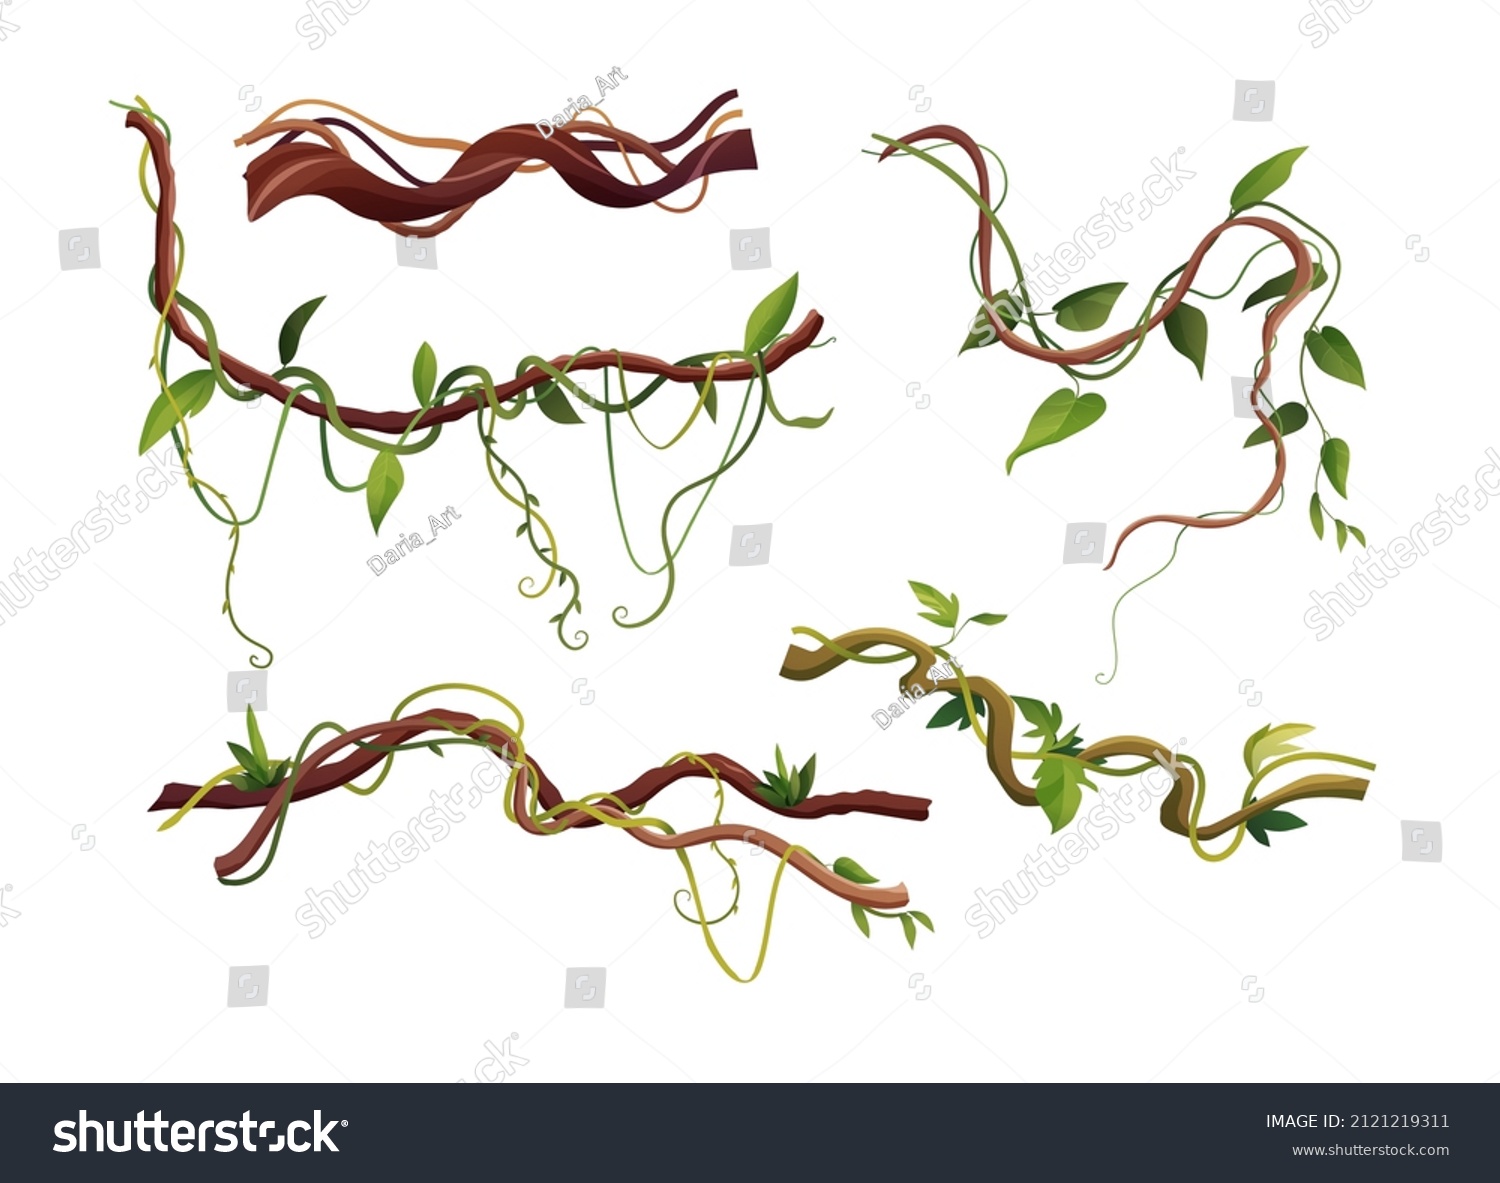 Liana or vine winding branches cartoon vector illustration. Jungle tropical climbing plants. #2121219311